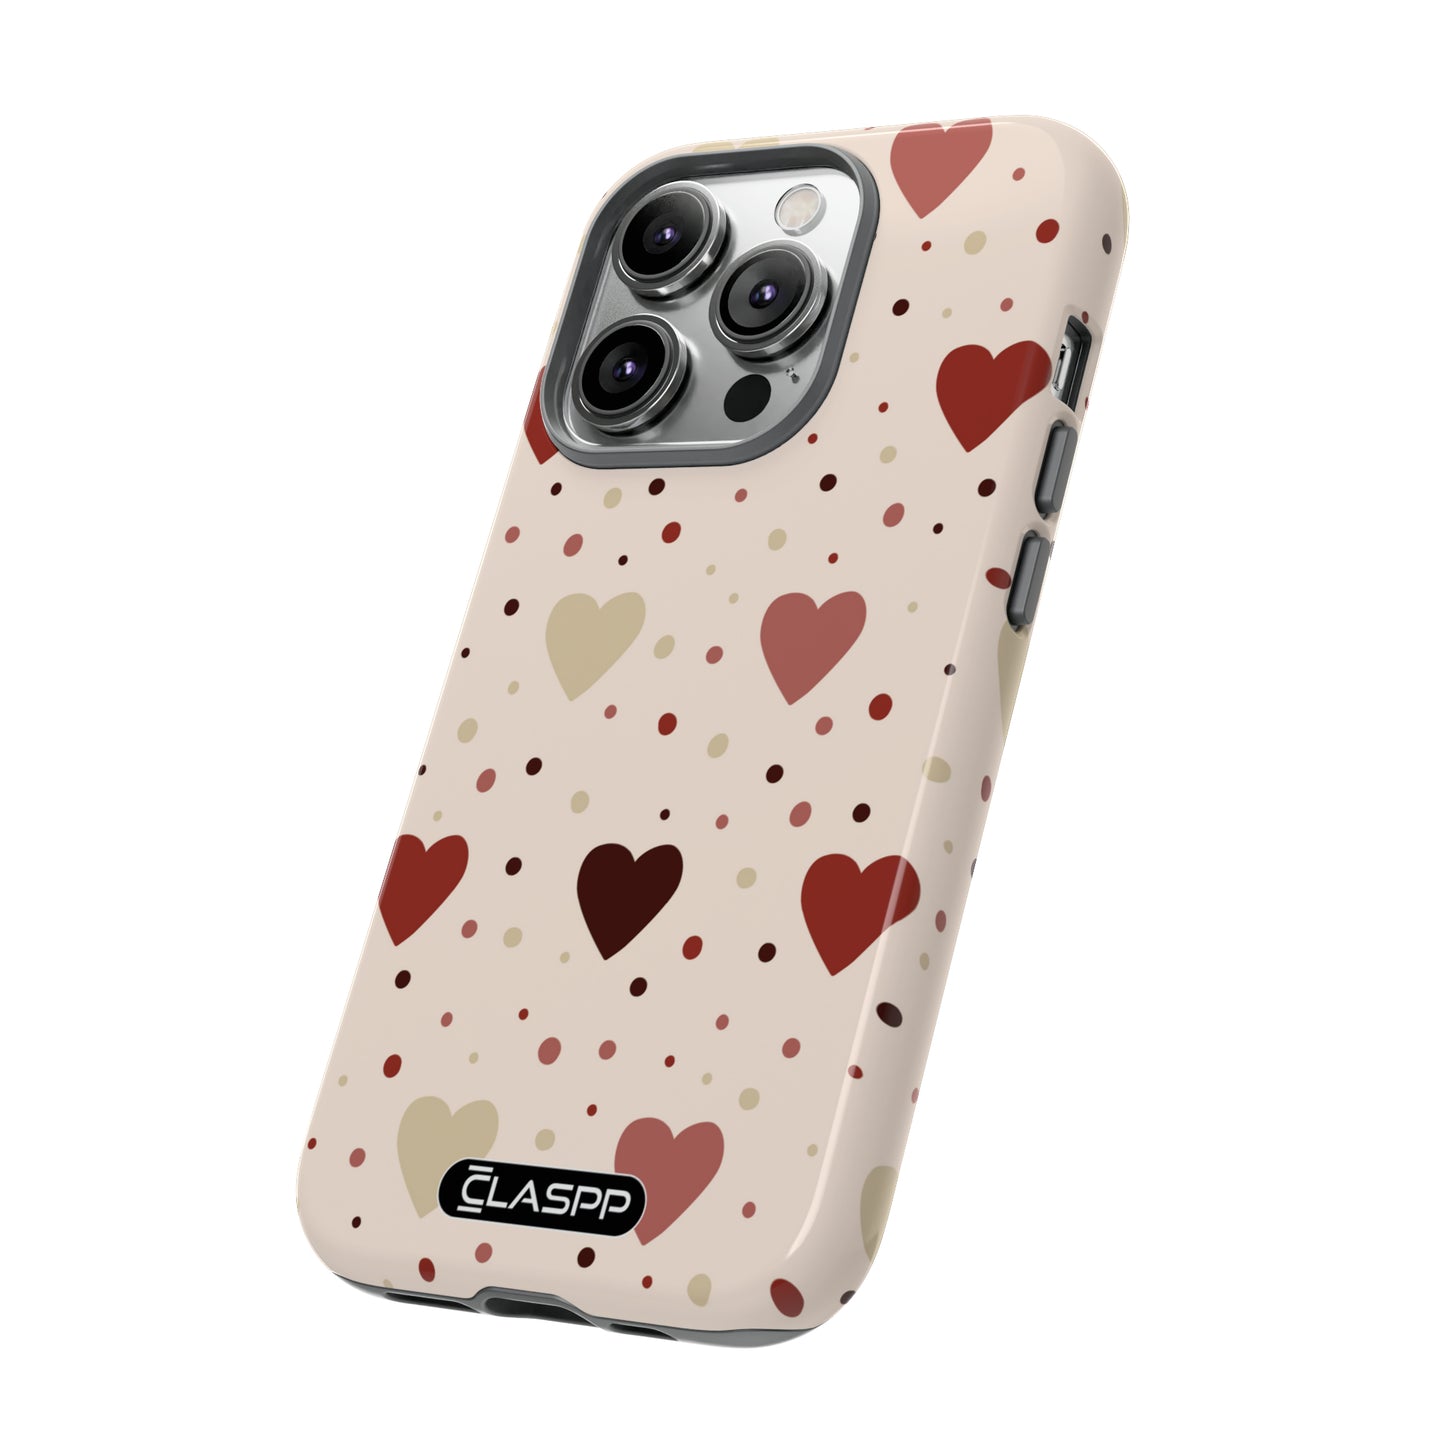 Love Everyone | Valentine's Day | Hardshell Dual Layer Phone Case